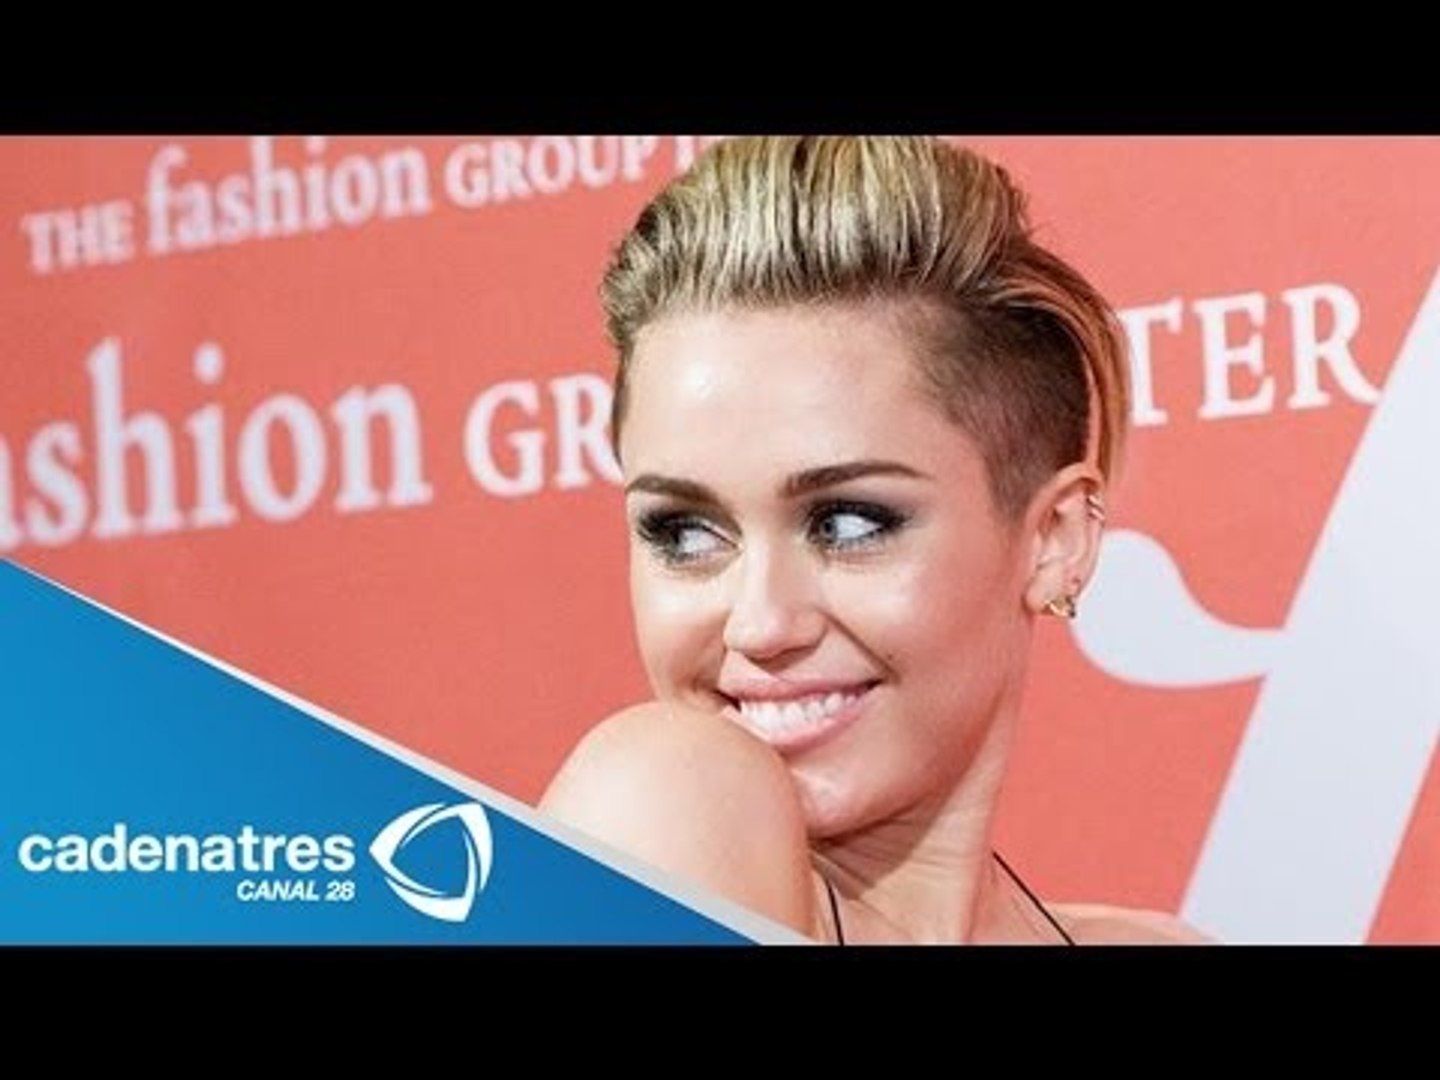 ⁣Afirman que Miley Cyrus es bisexual / They claim that Miley Cyrus is bisexual